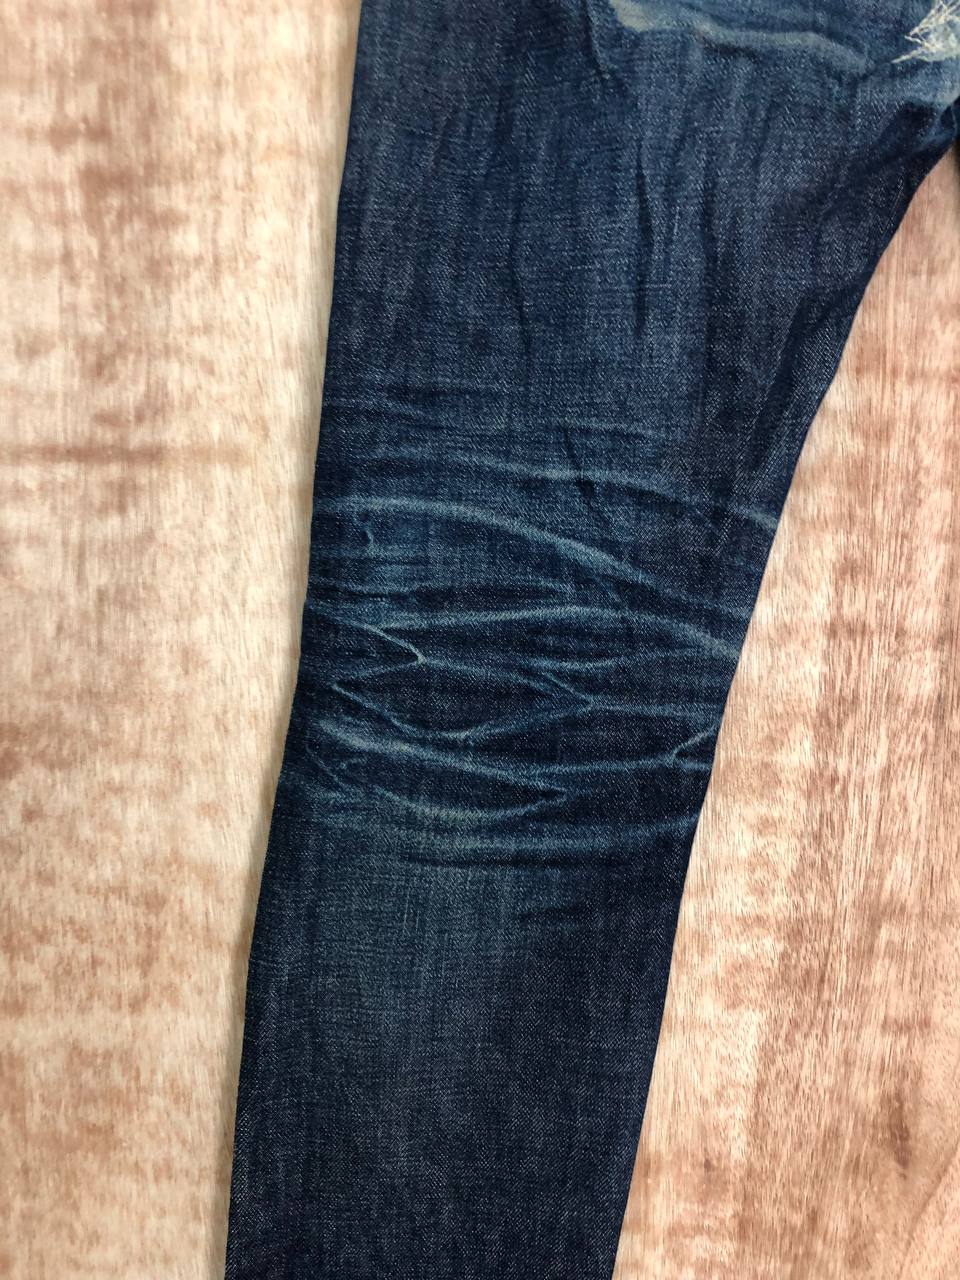 APC Petit Standard Jeans Distressed Selvedge - 16